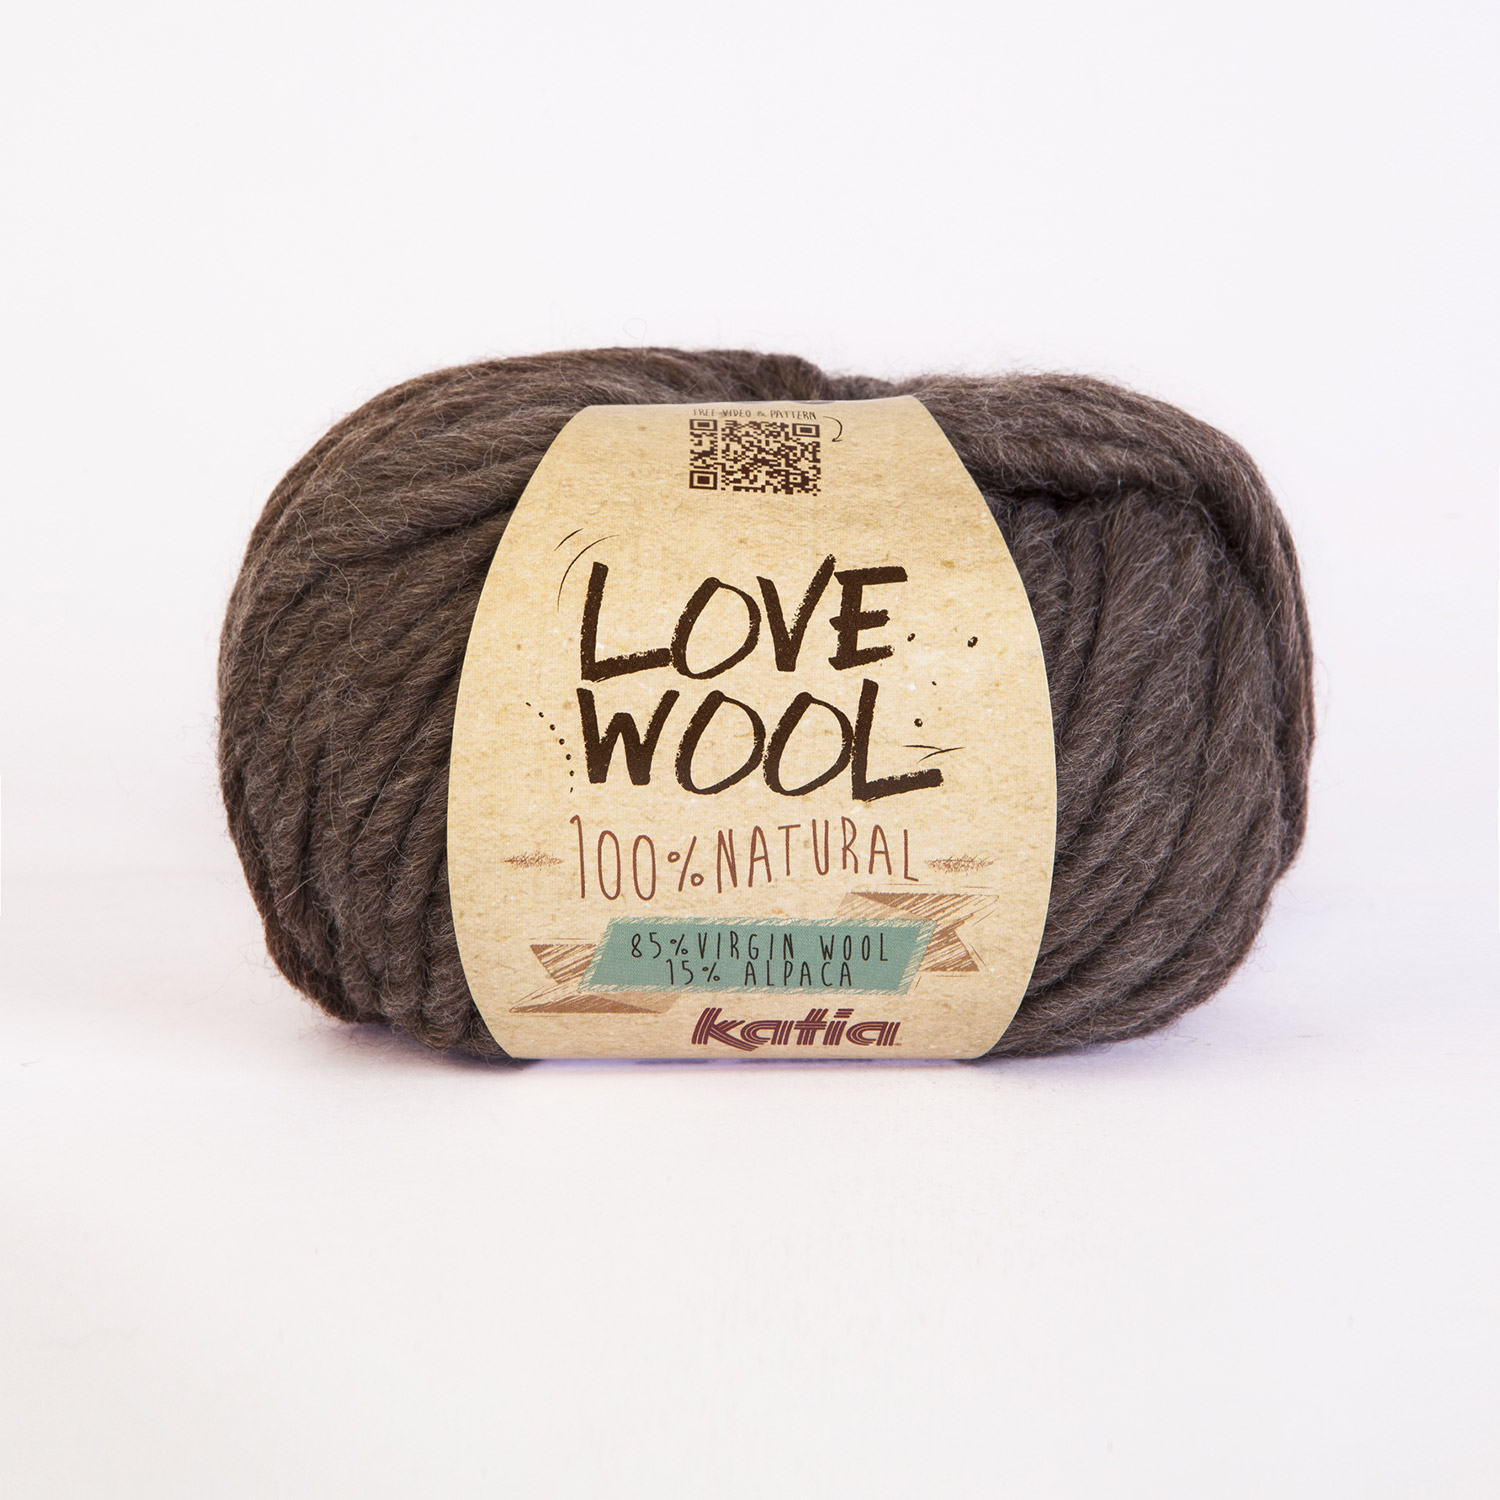 Отзыв об испанской пряже Love wool от фирмы KATIA